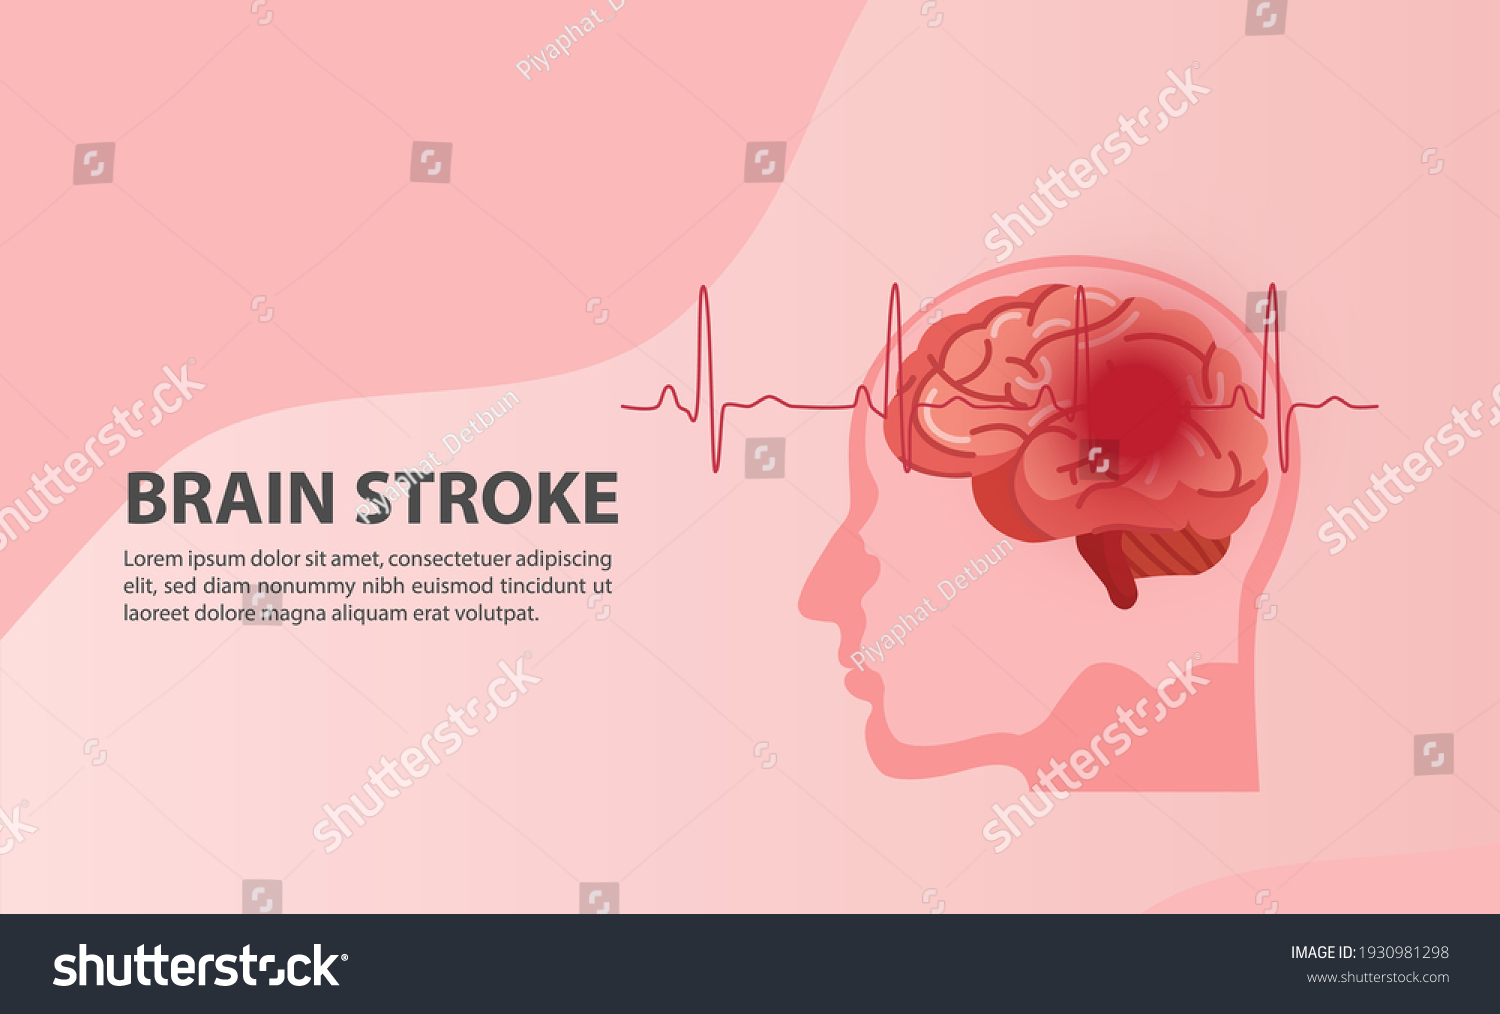 Scientific Medical Illustration Human Brain Stroke Stock Vector Royalty Free 1930981298 5555